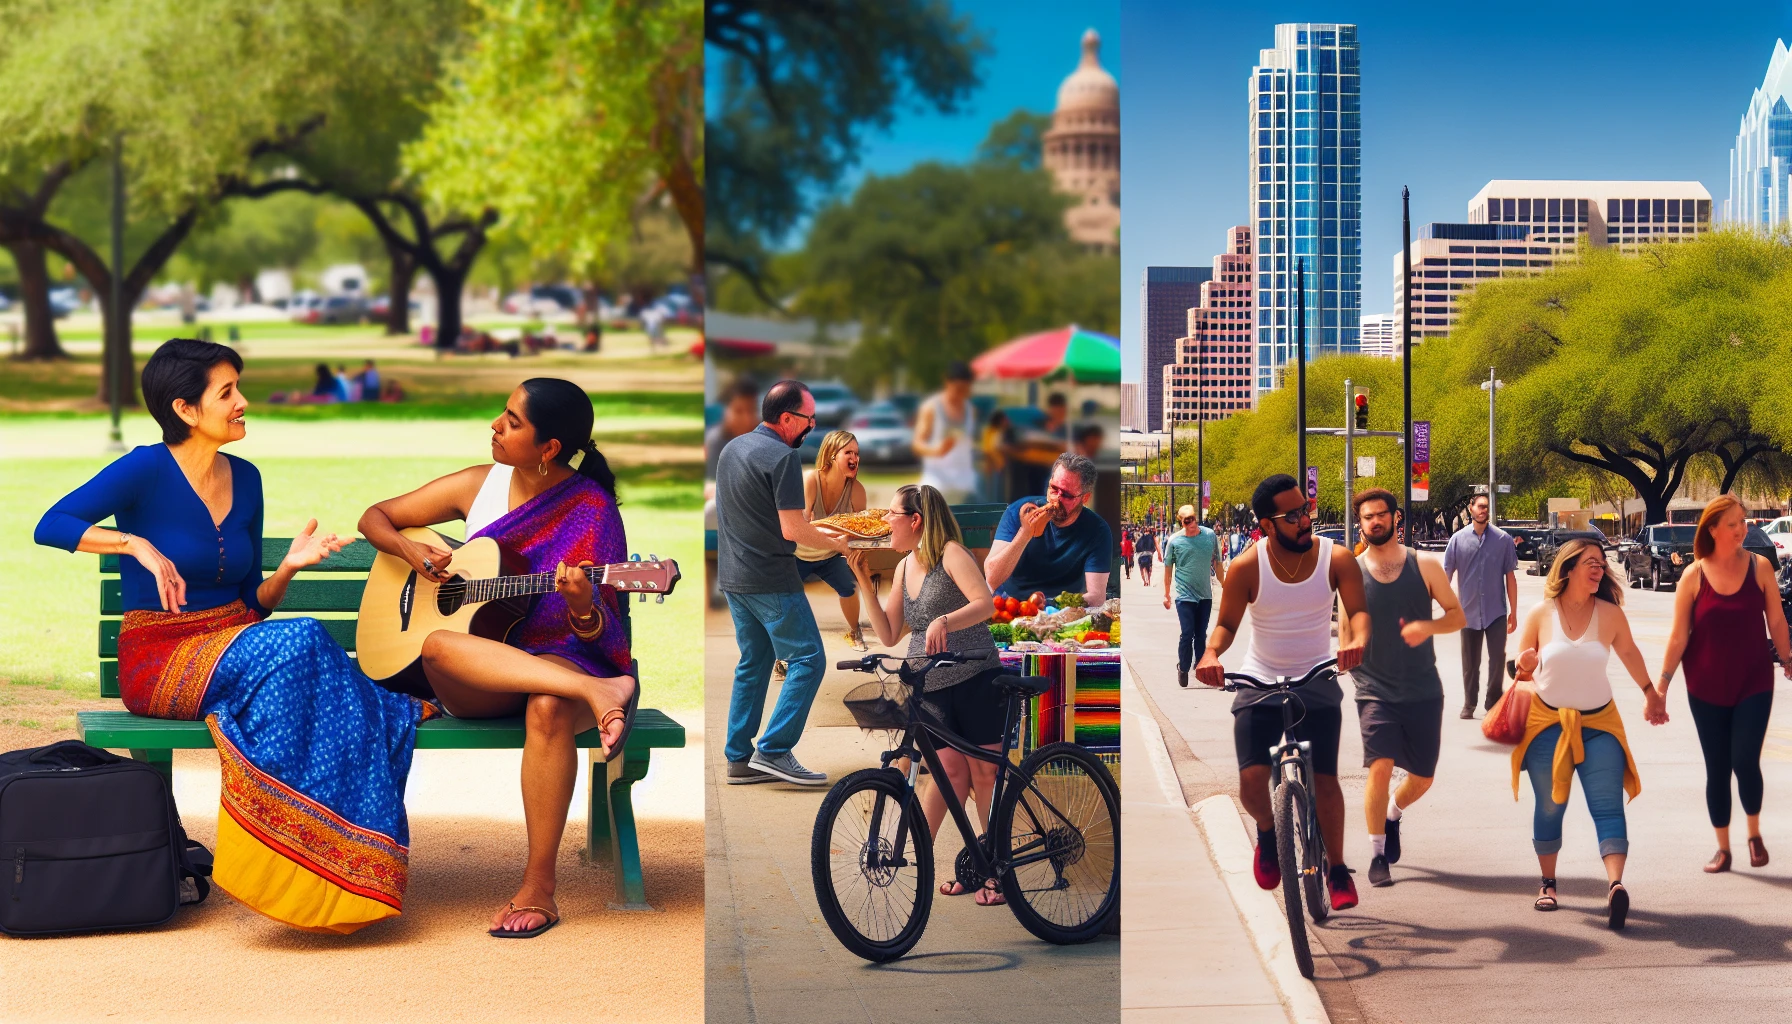 Laid-back vibe in Austin vs diverse population in Houston